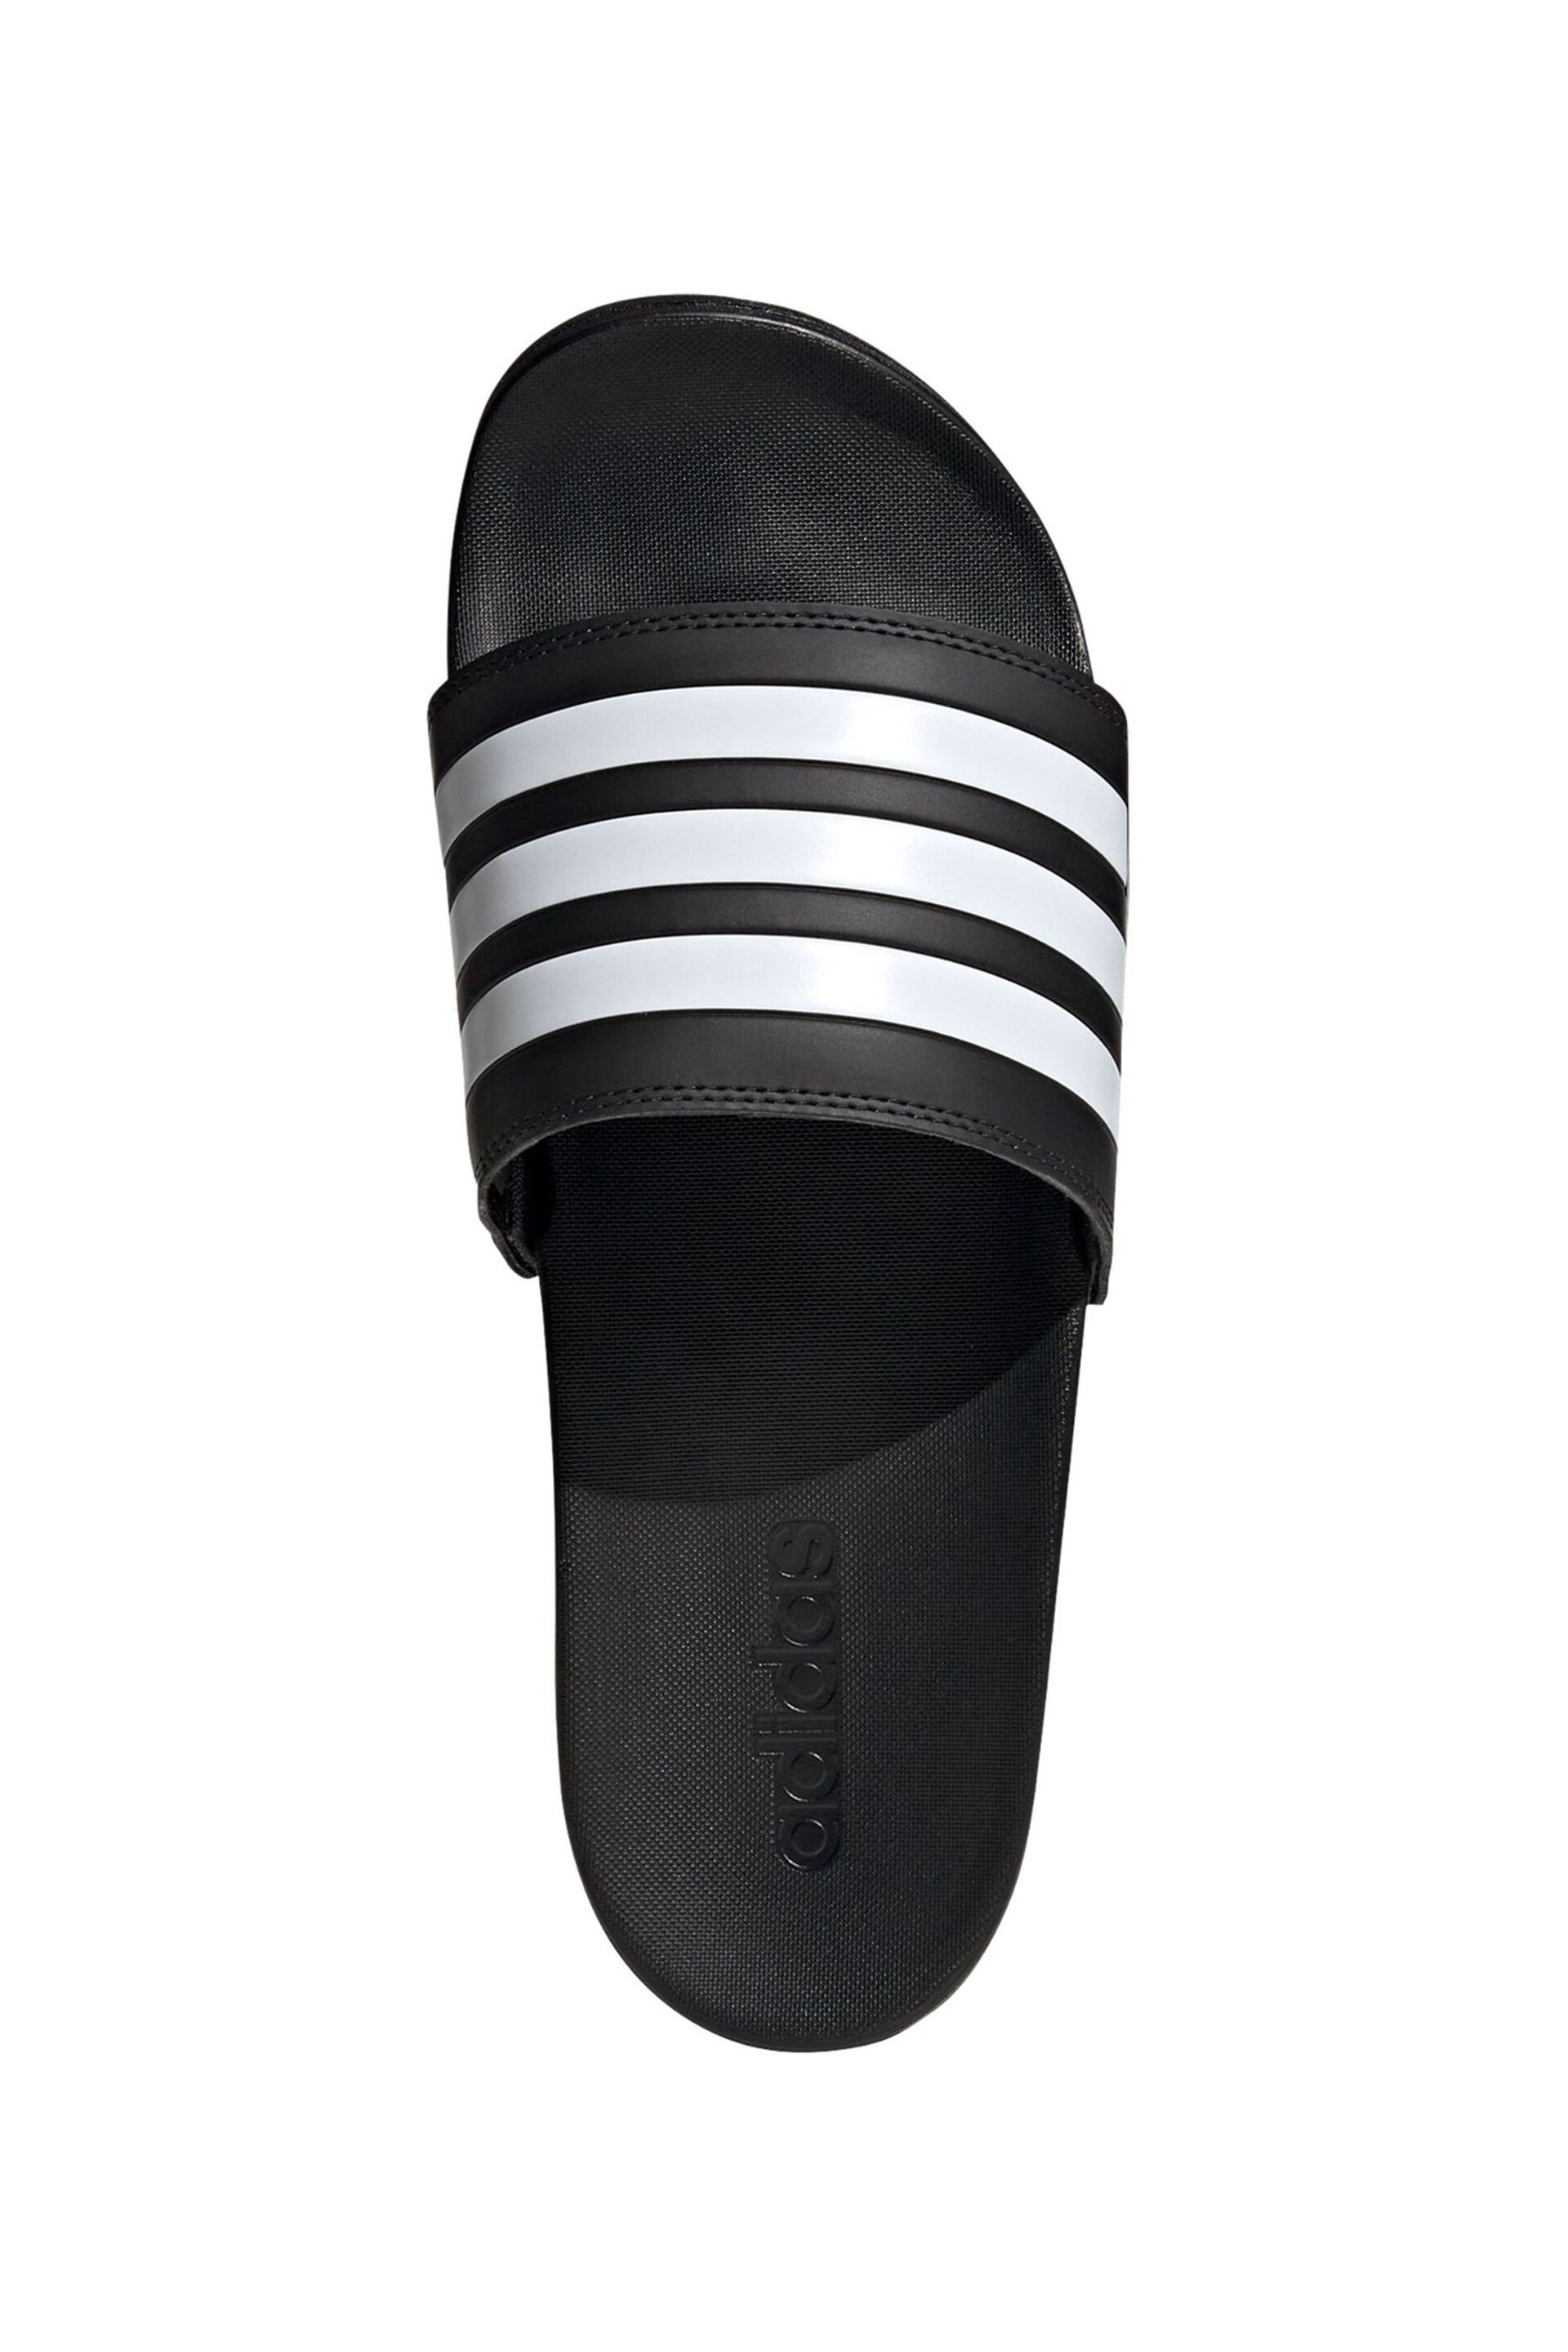 adidas Black Sportswear Adilette Comfort Sandals - Image 6 of 8